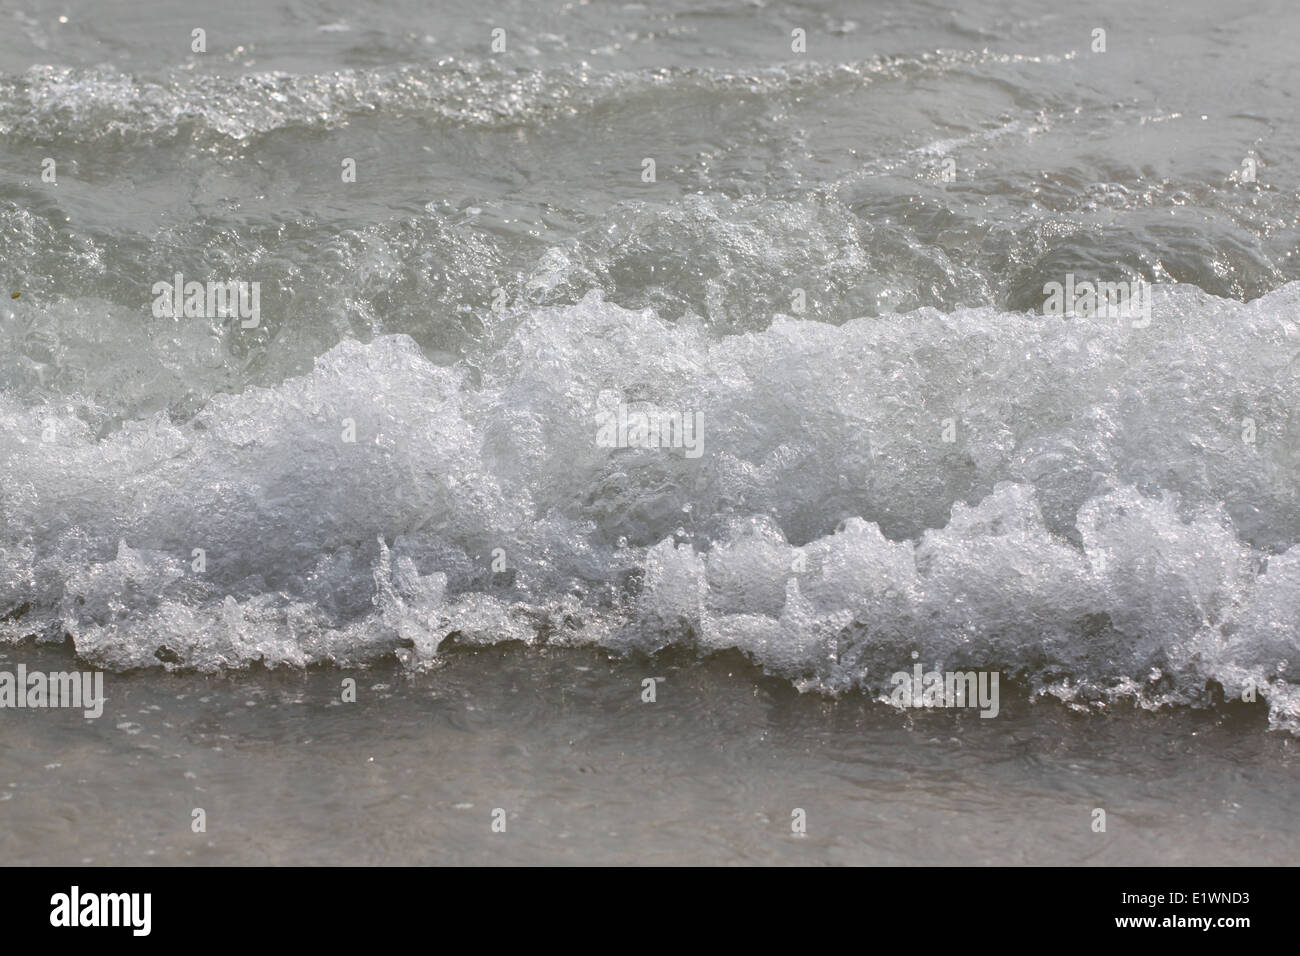 ocean wave rolling curling lip crashing on shallow sandbars. Stock Photo